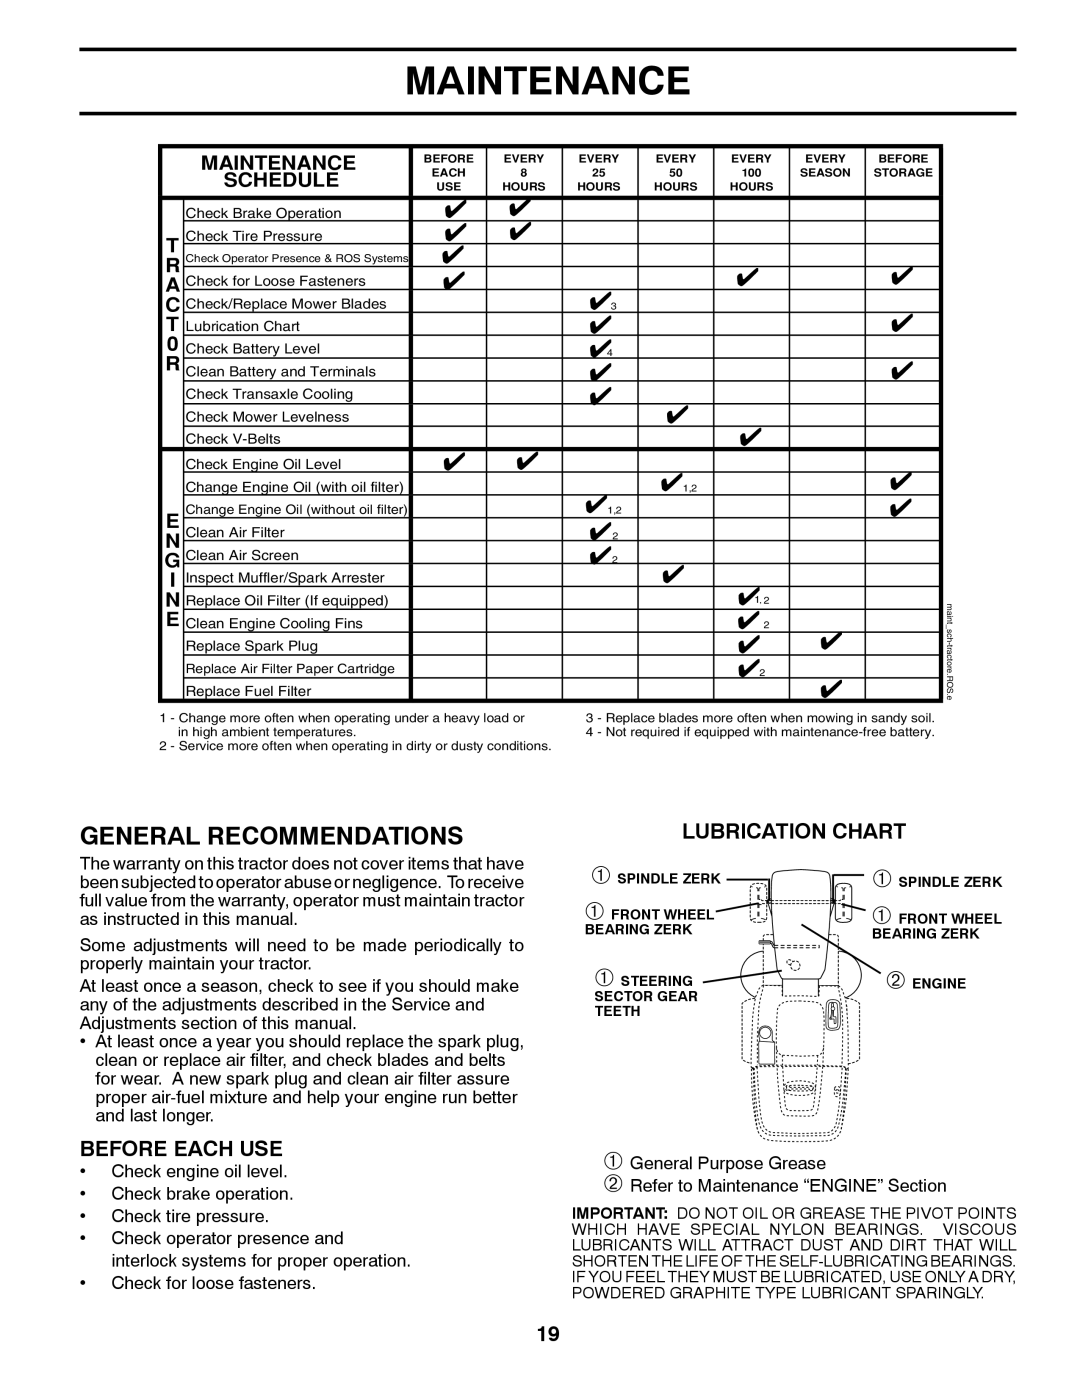 Husqvarna CTH2036 XP owner manual Maintenance, Lubrication Chart 